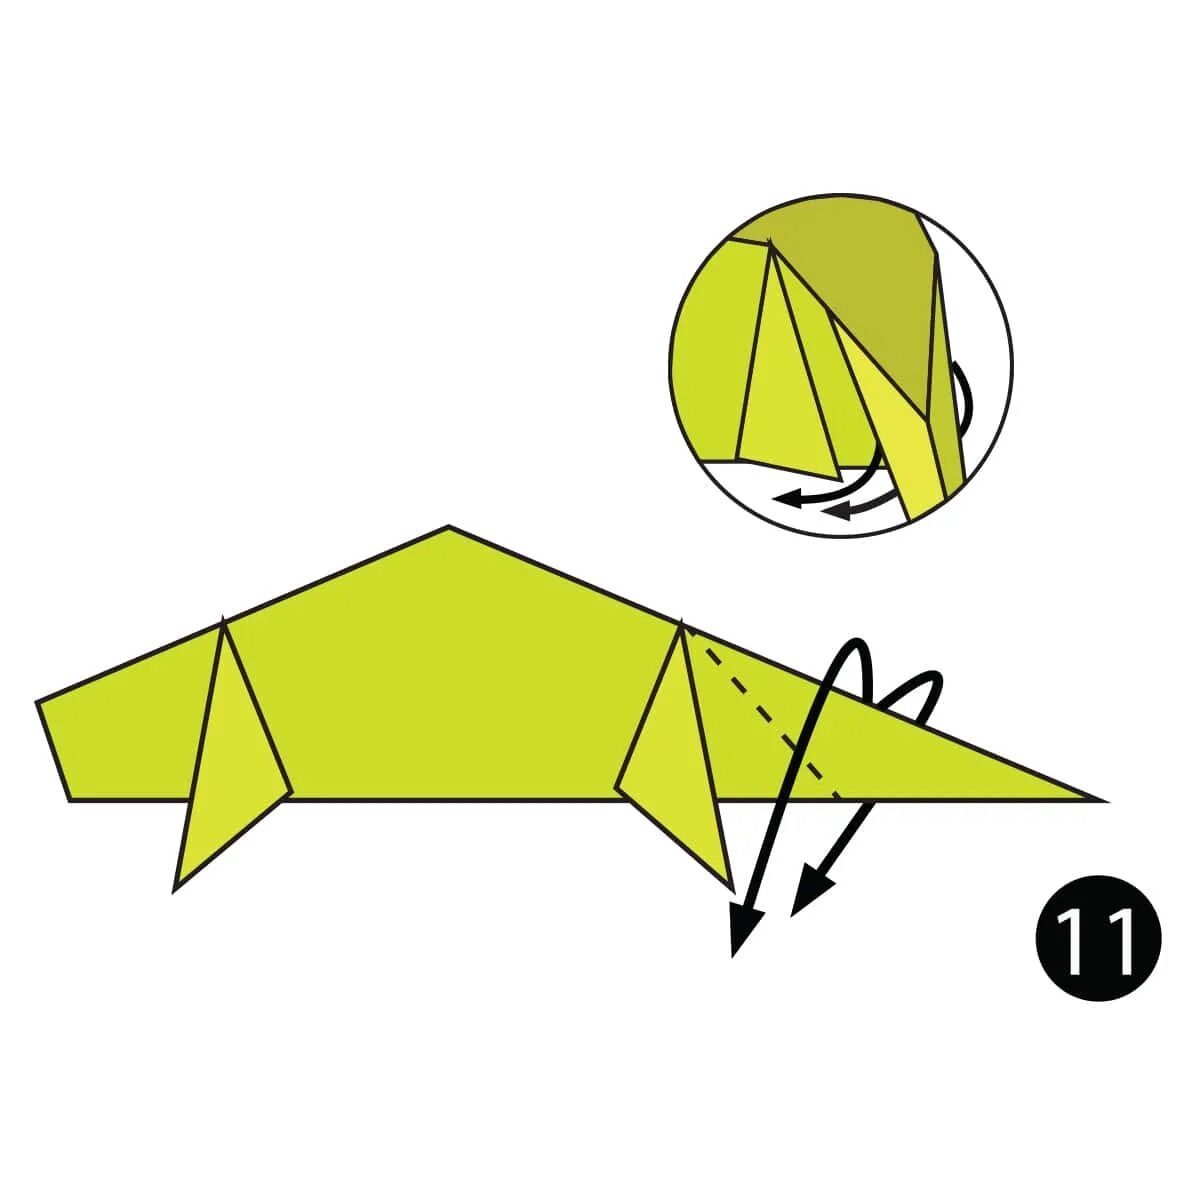 Хамелеон оригами для детей. Поделка хамелеон из бумаги. Оригами хамелеон схема. Аппликация хамелеон из бумаги. Хамелеон схема